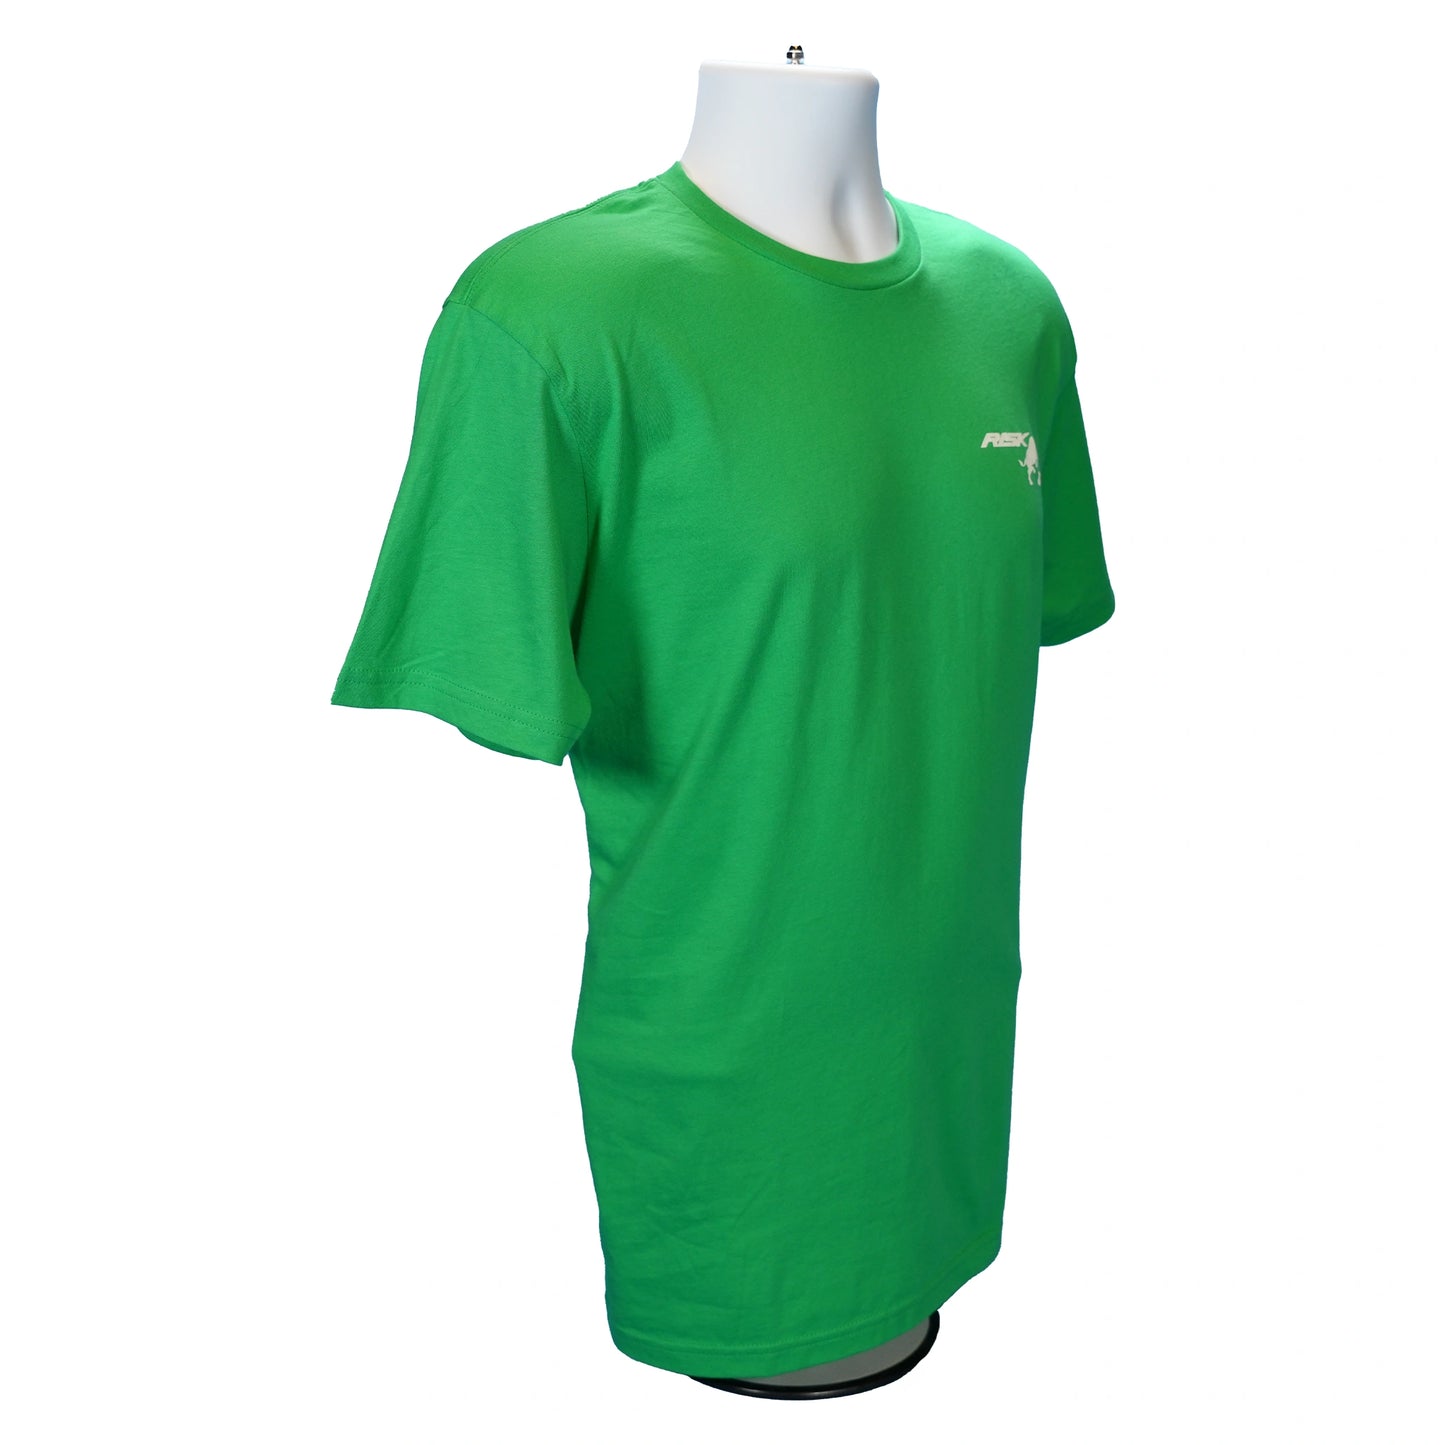 Risk On Green Silk Screened T-Shirt